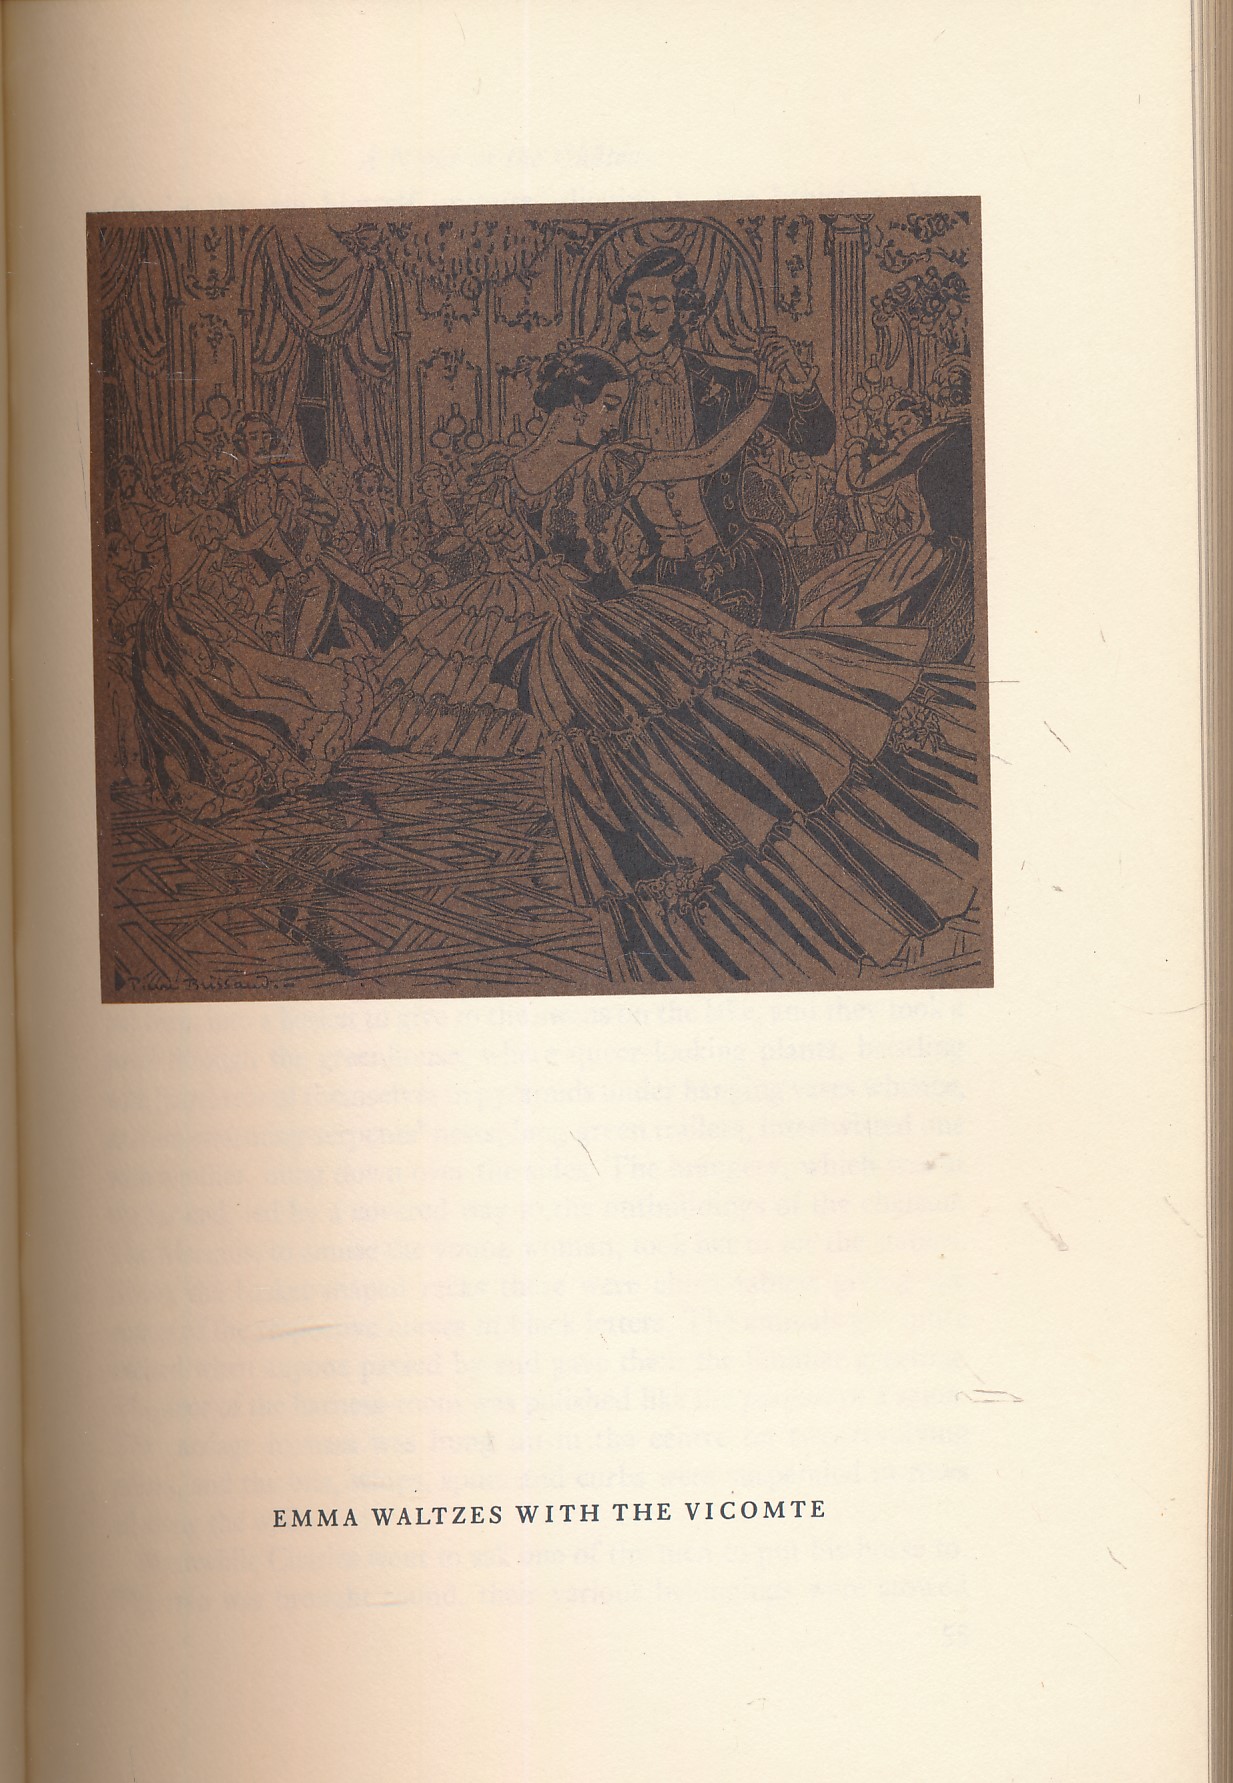 Madame Bovary. Easton Press Collector's Edition.